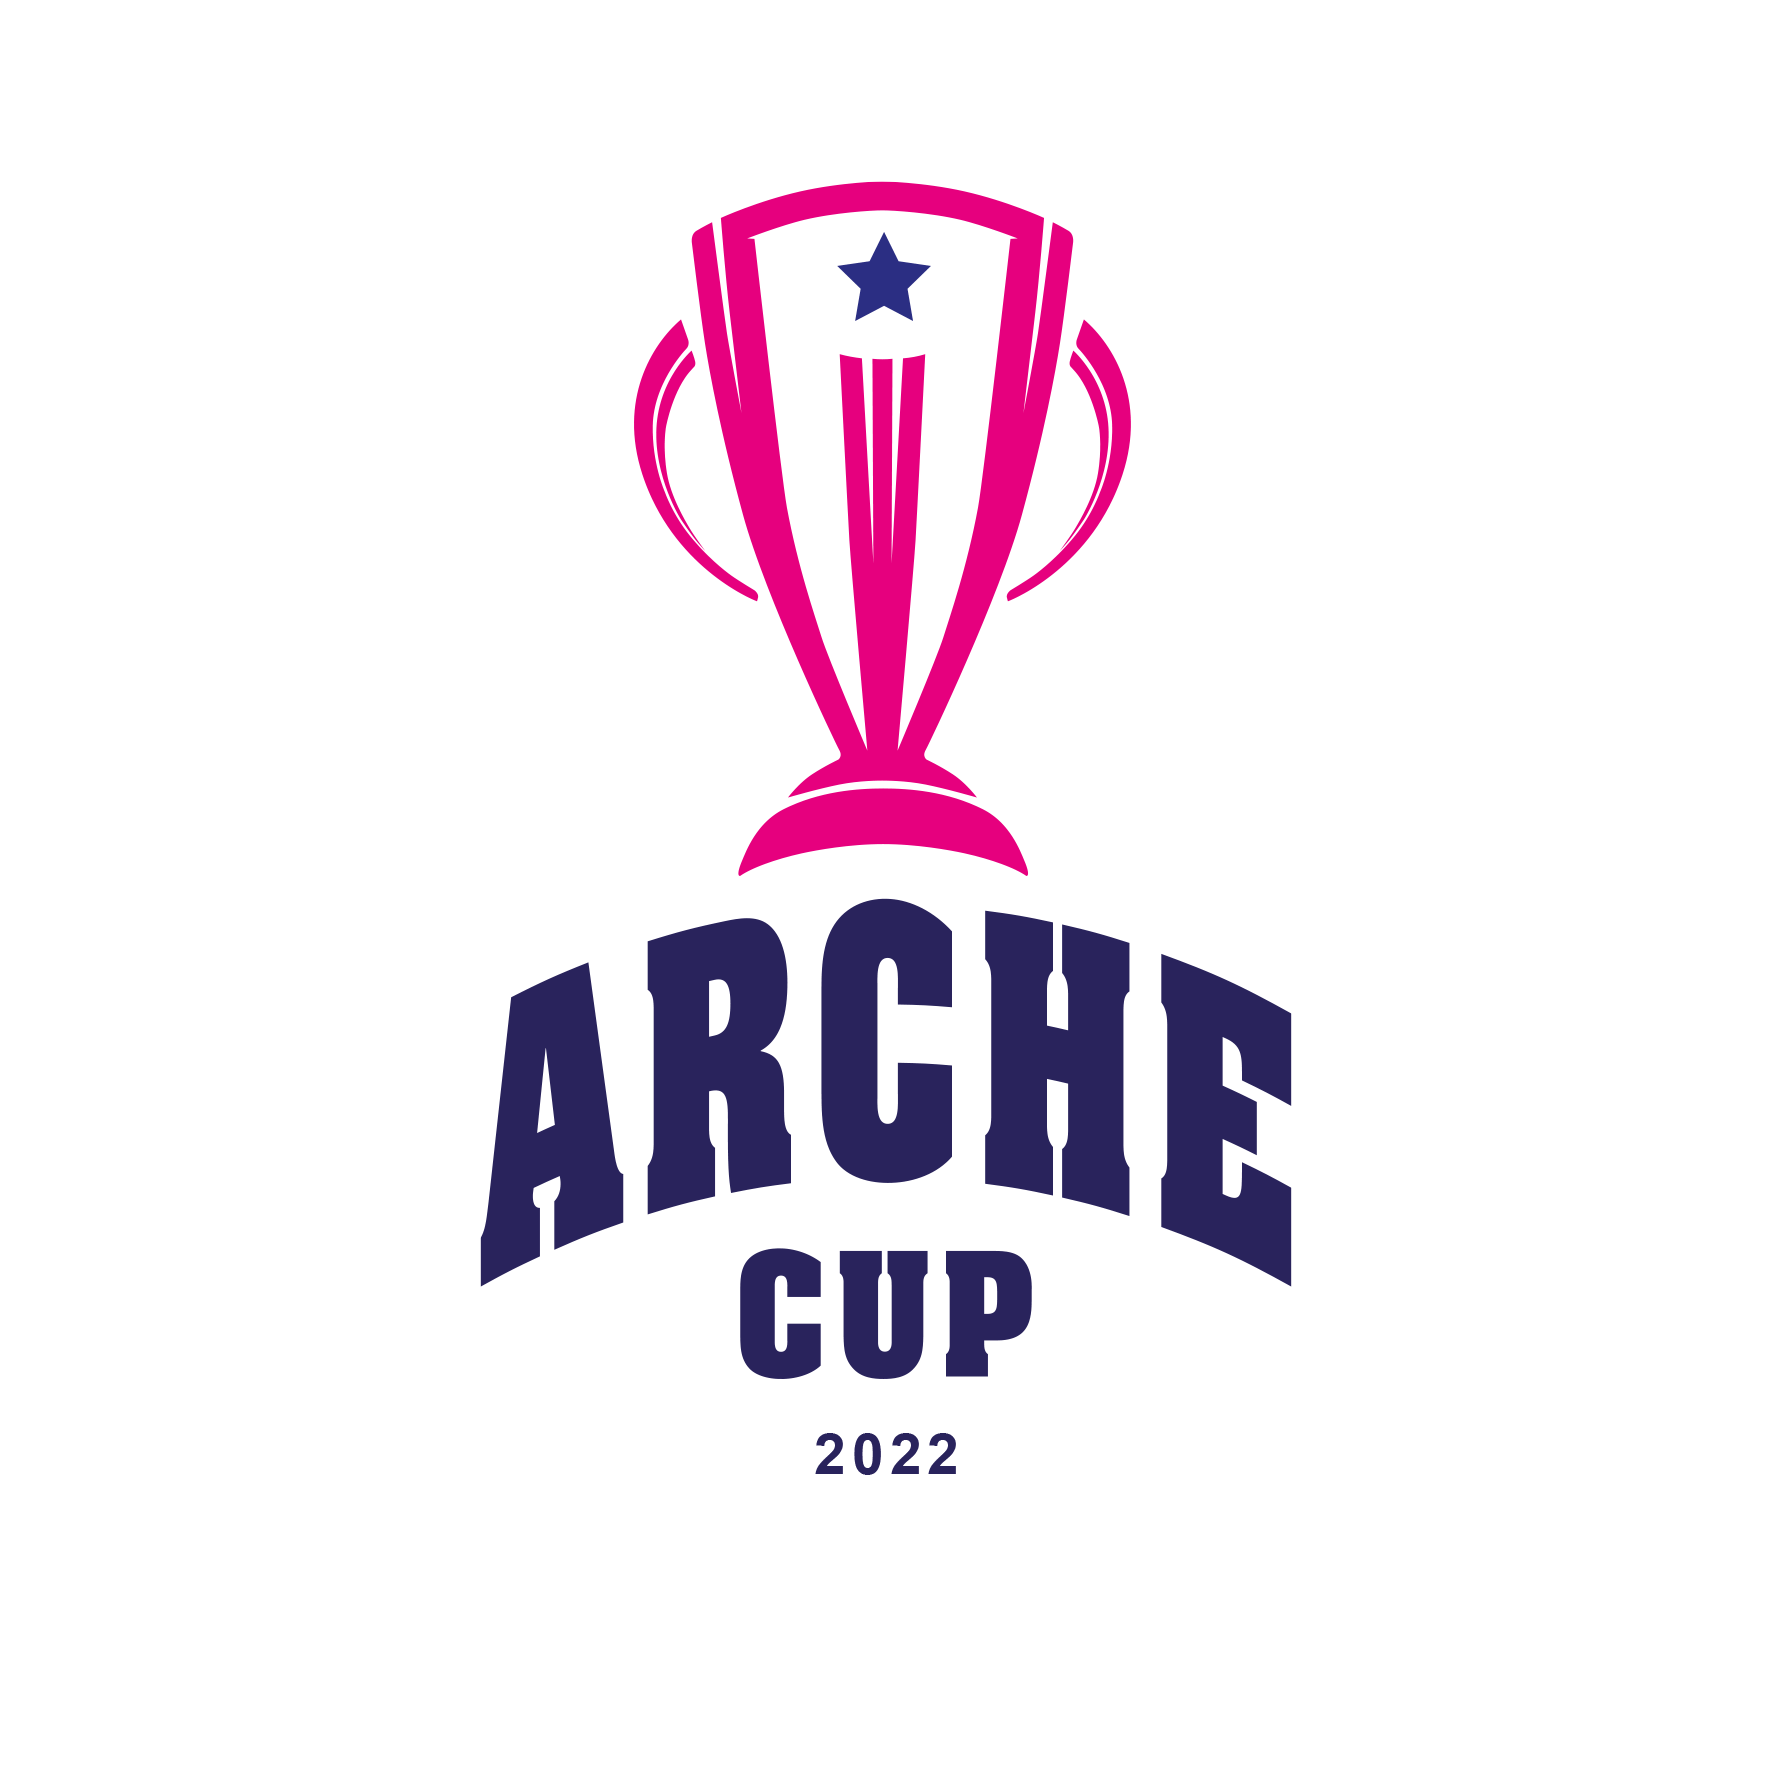 Arche Cup 2022